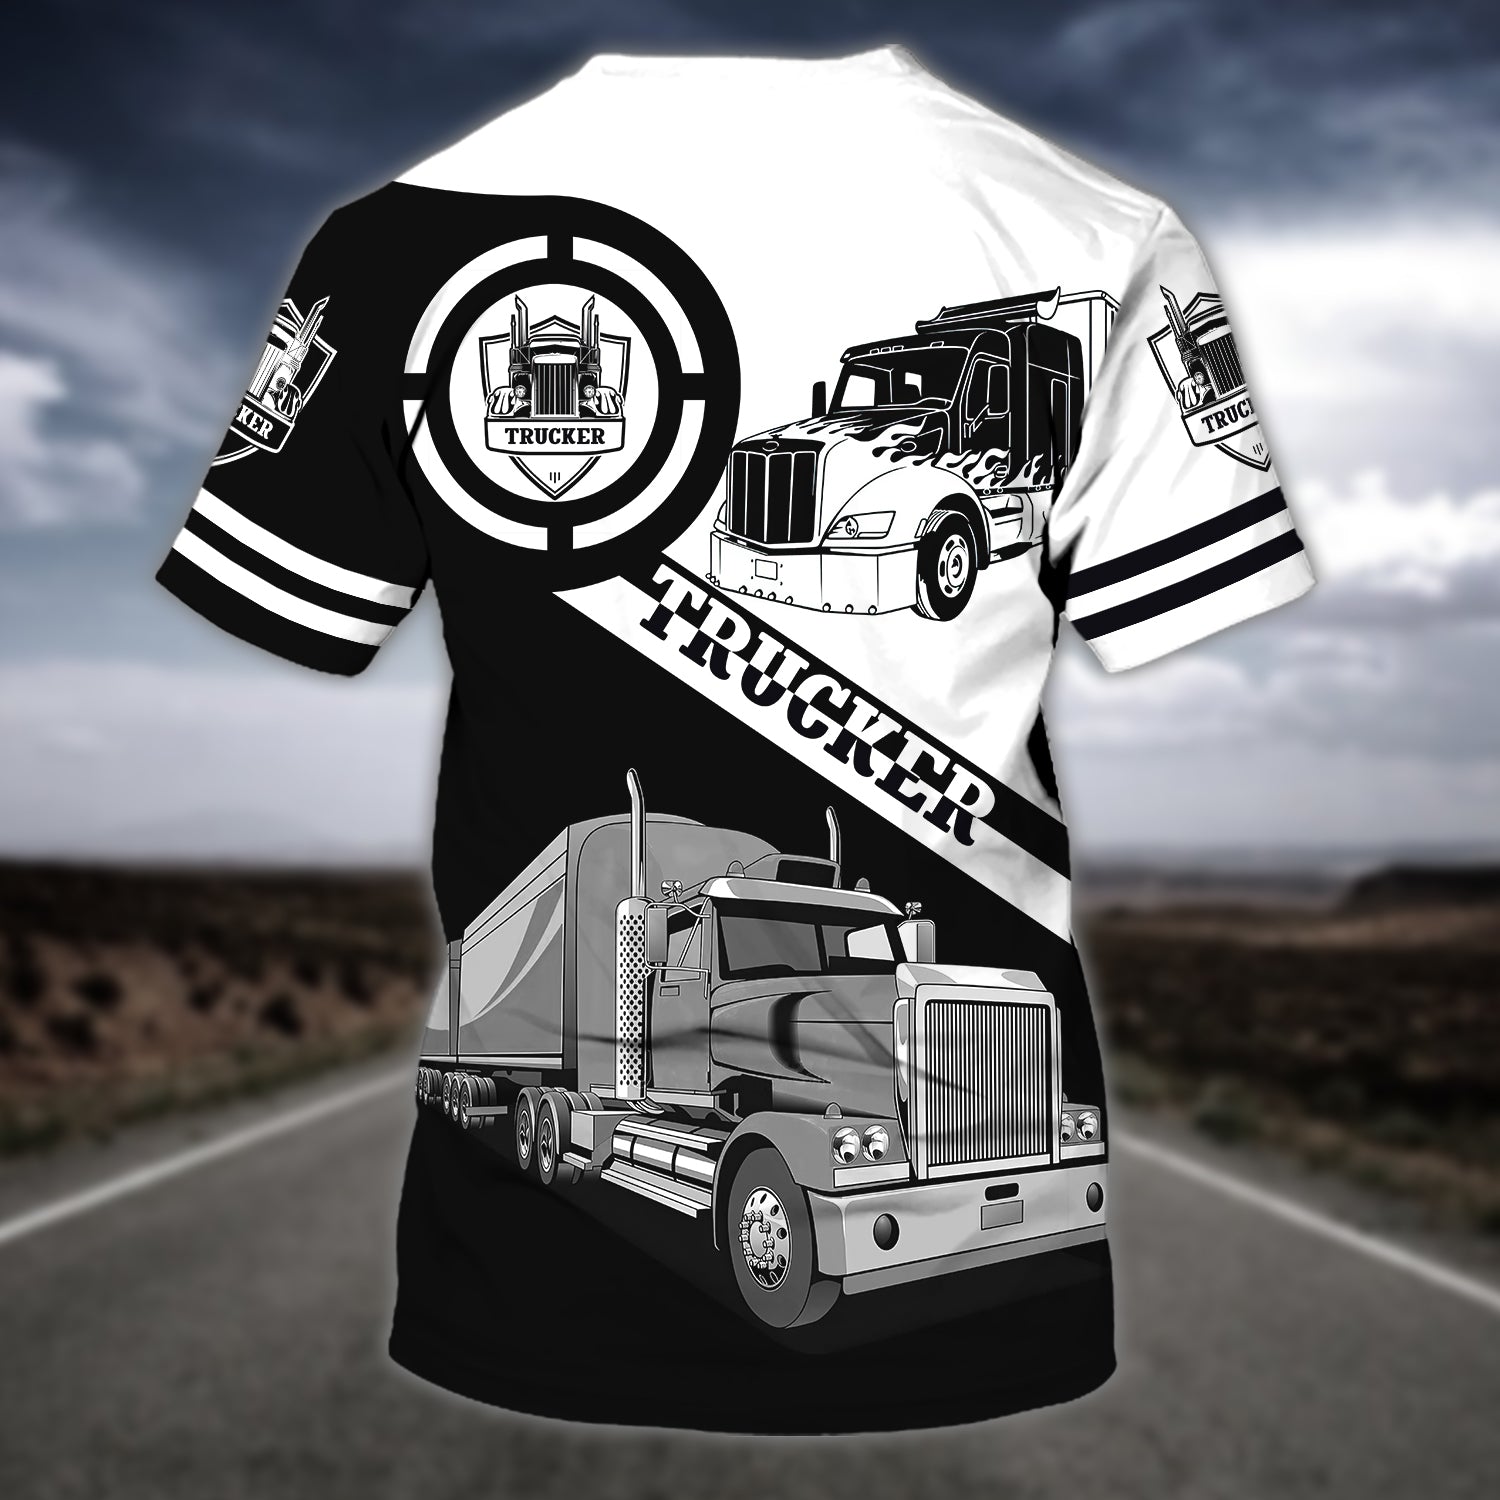 Personalized Name Truck Driver Shirt Trucker Driving Team Uniform Shirts